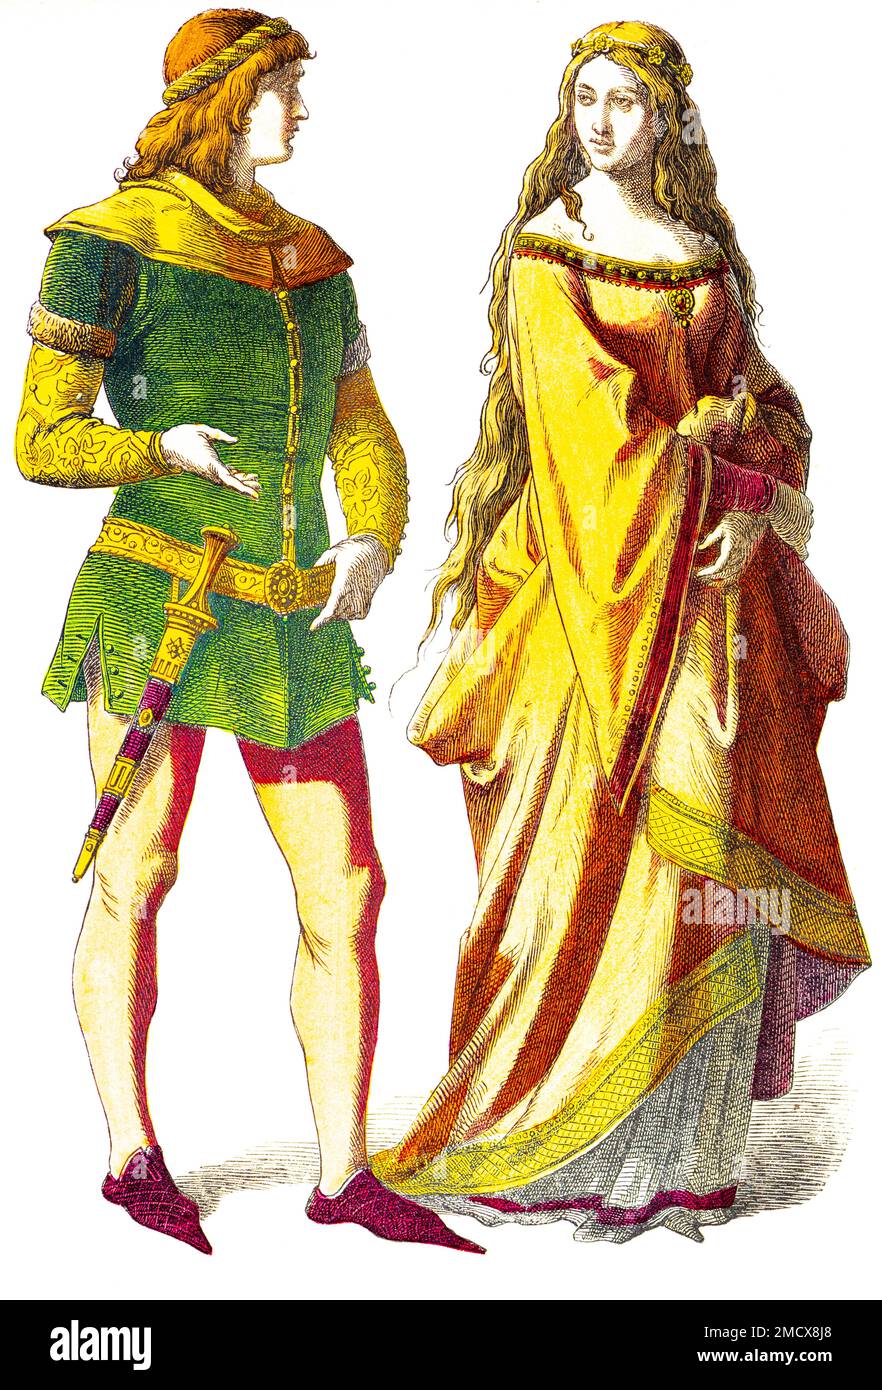 Muenchener Bilderbogen, costumes, 14th century, knight and noblewoman, man, sword, woman, robe, fashion, elegant, portrait, historical illustration Stock Photo